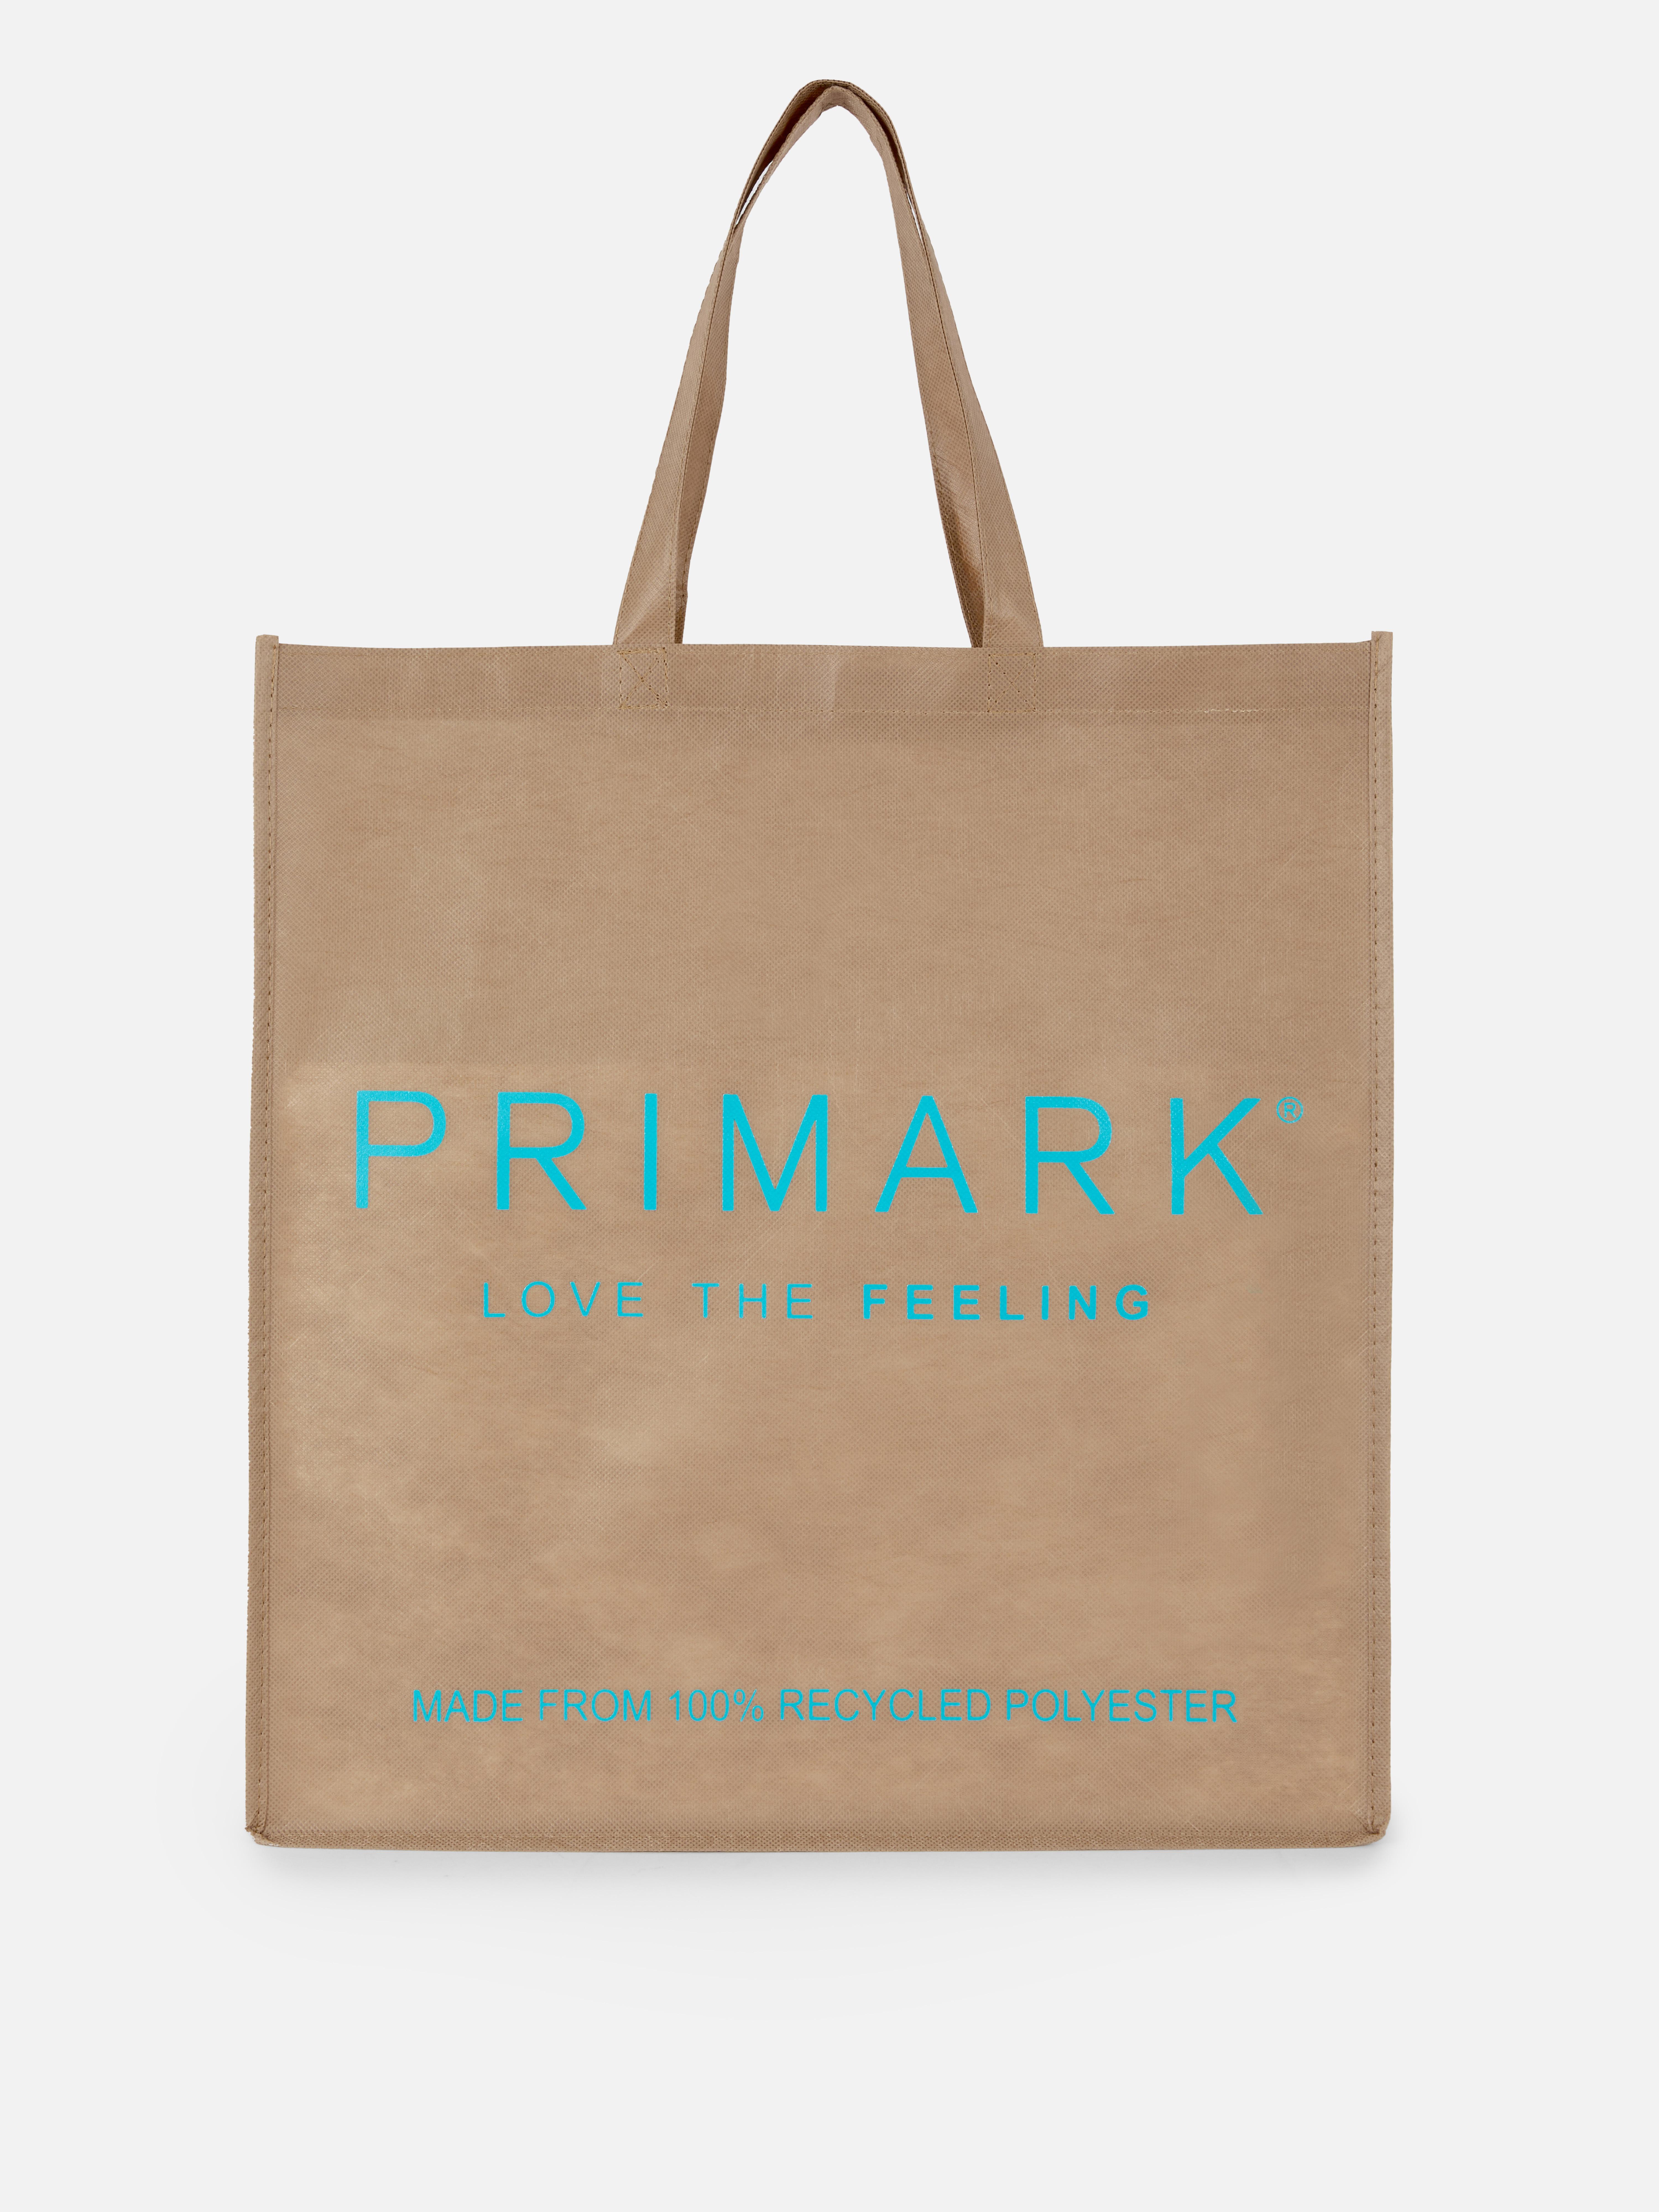 Grand sac réutilisable Primark